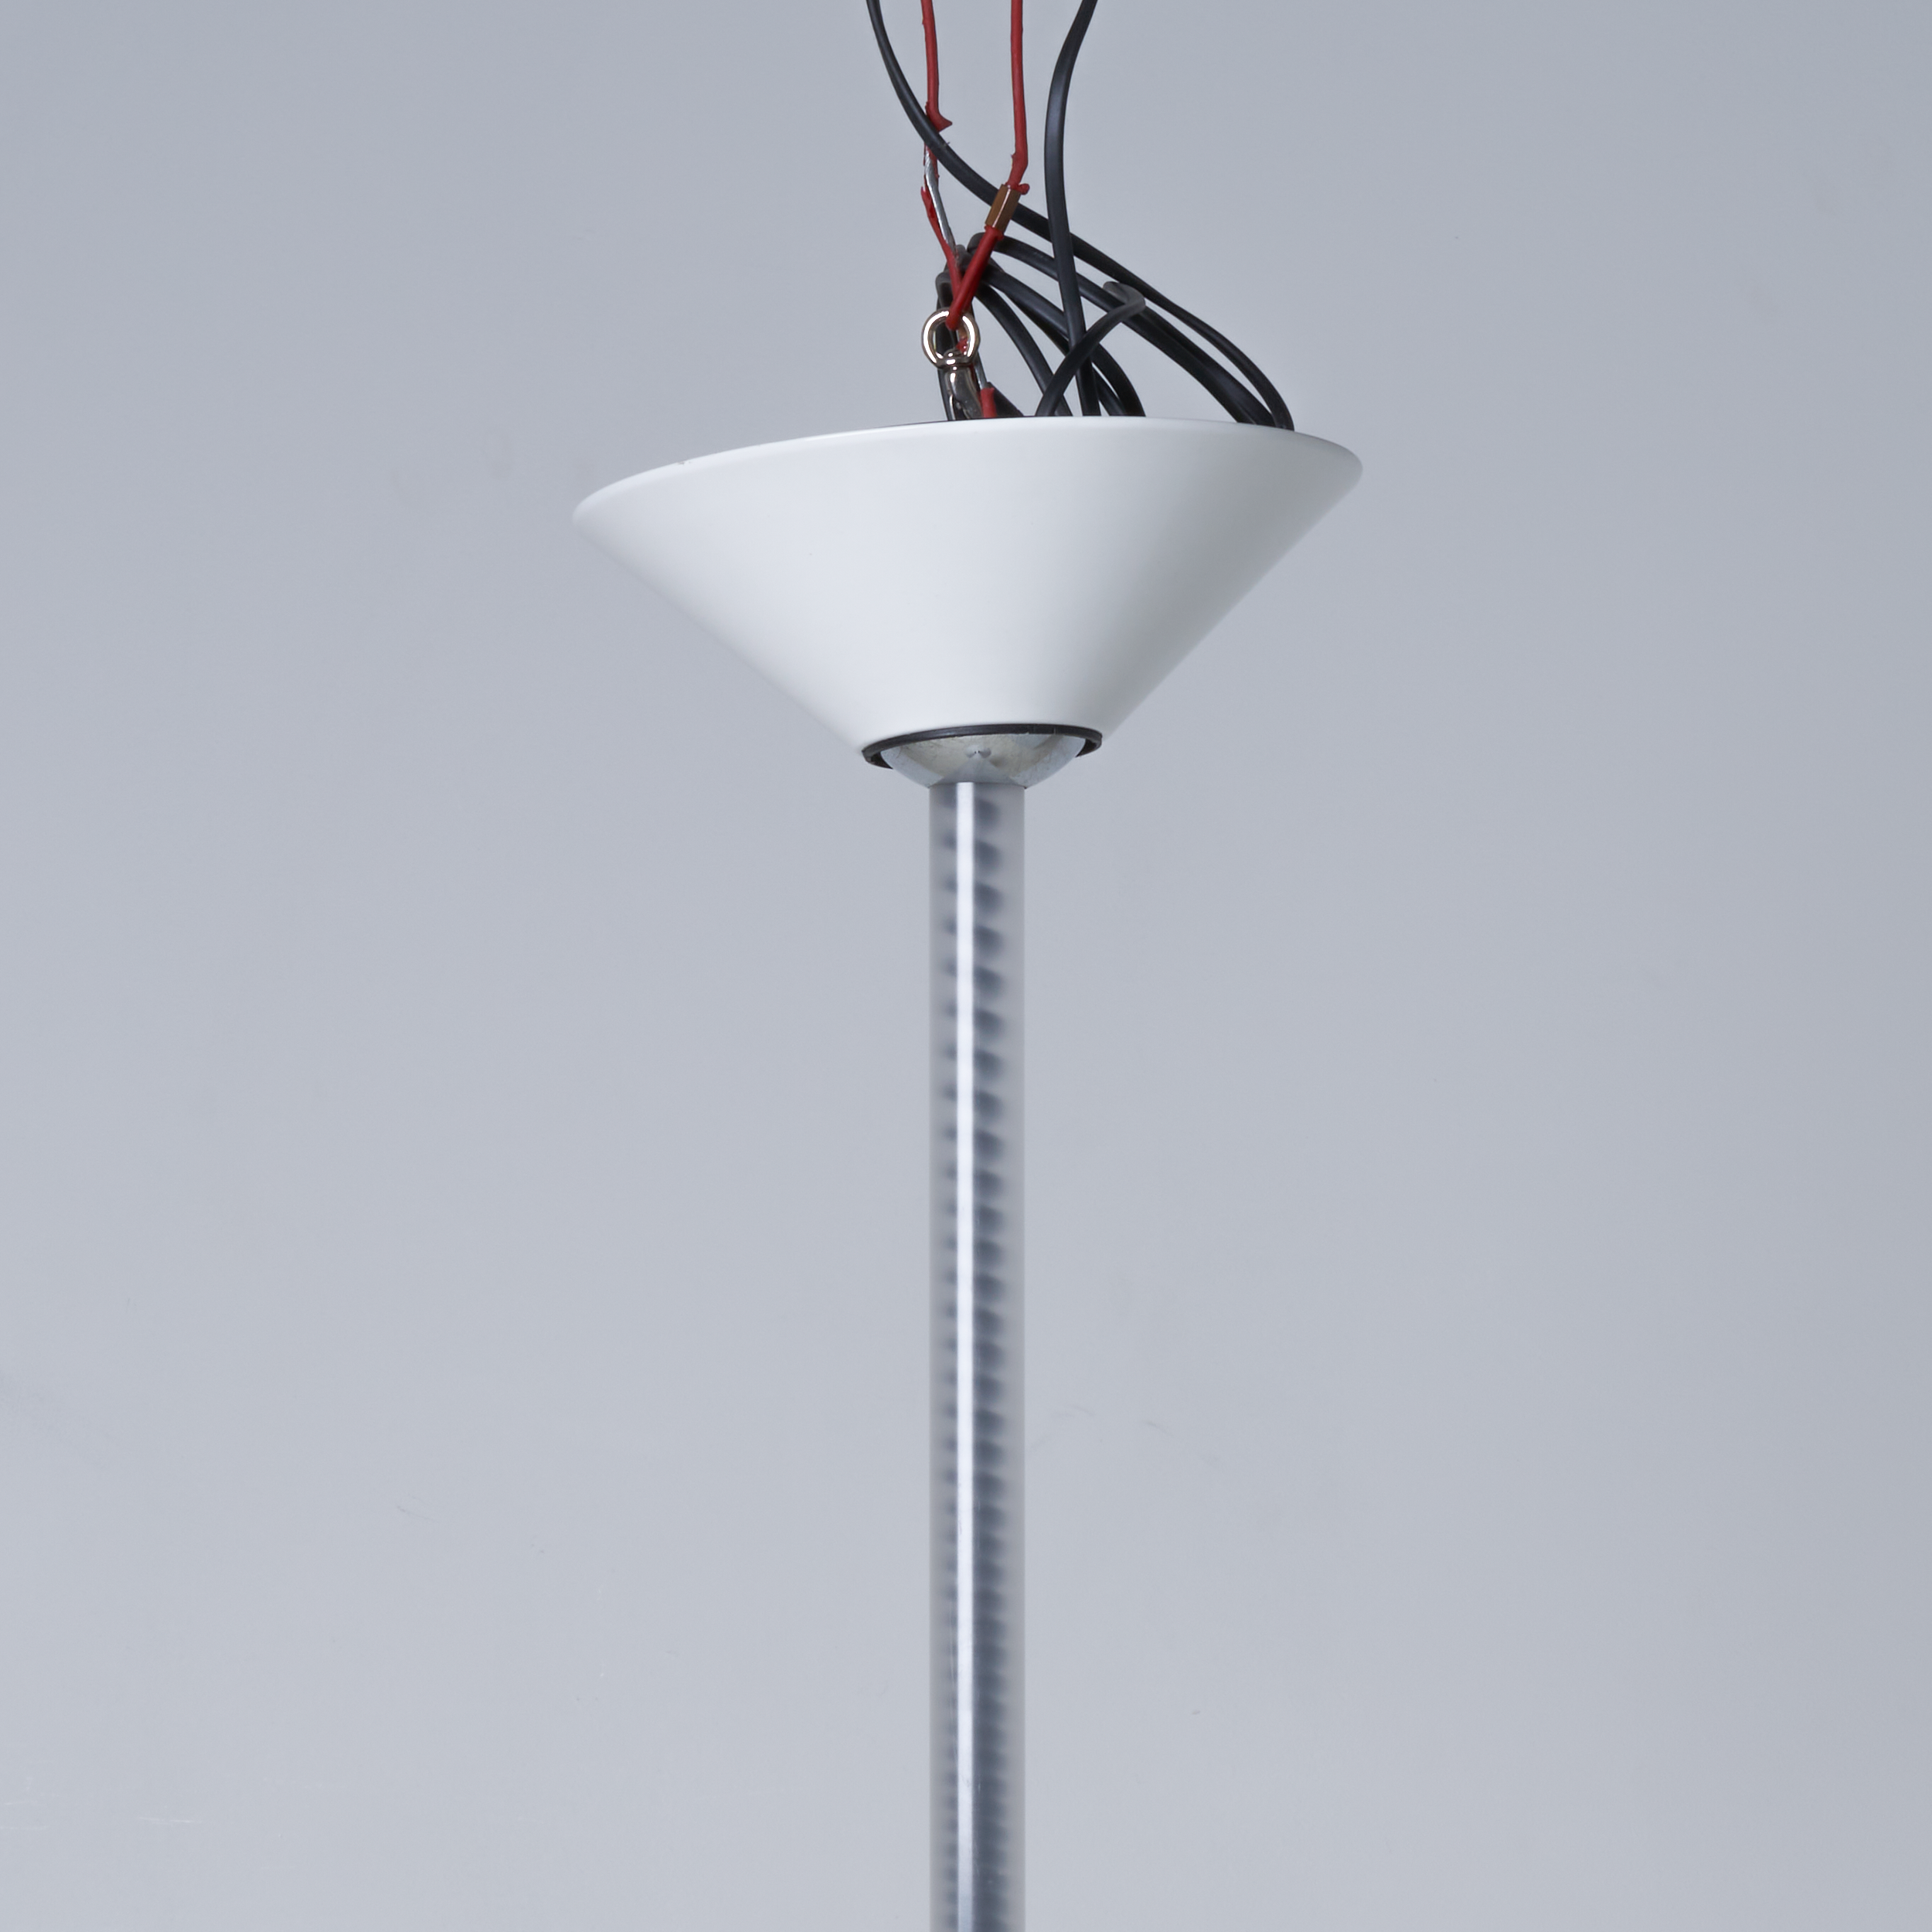 LUMINA LAMP, MODEL FLIP, ITALY, DESIGNED BY HEINRICH WIEDERHOLT, 1990s